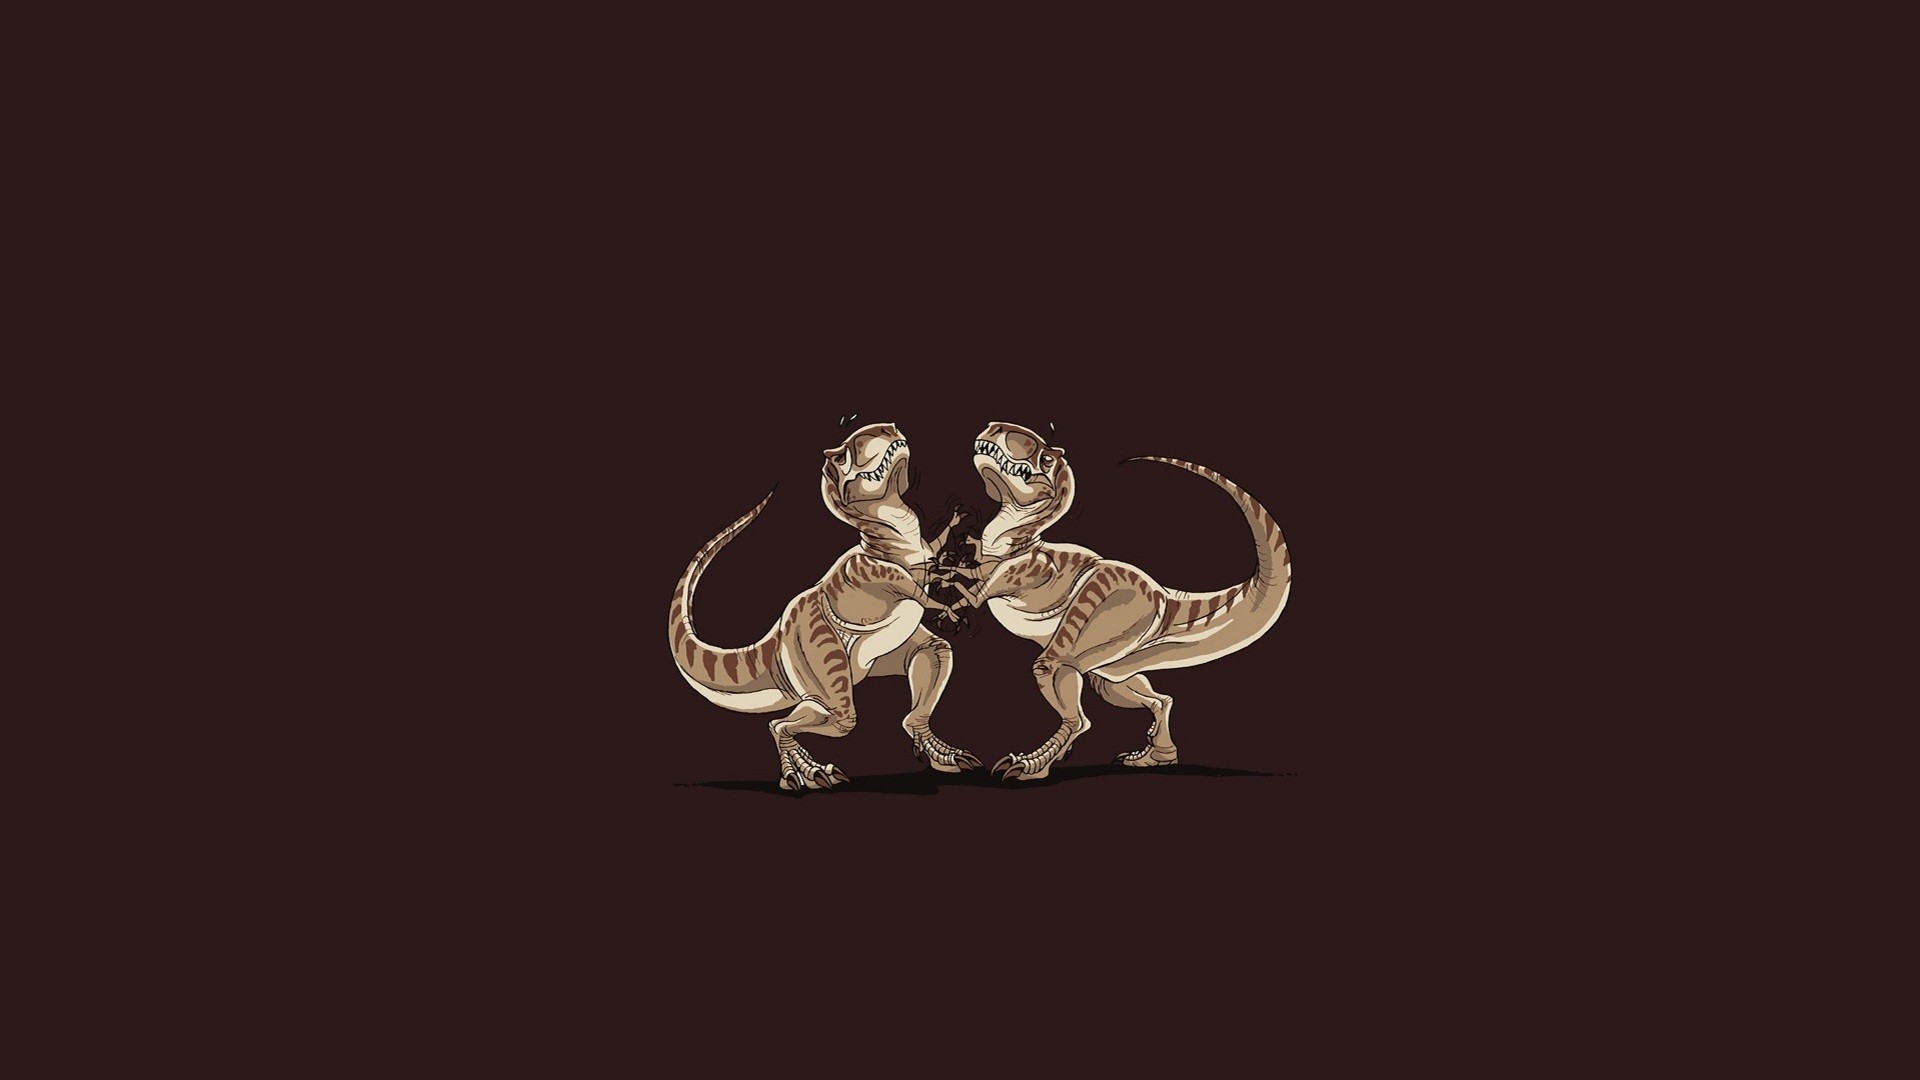 General 1920x1080 minimalism Tyrannosaurus rex humor animals simple background